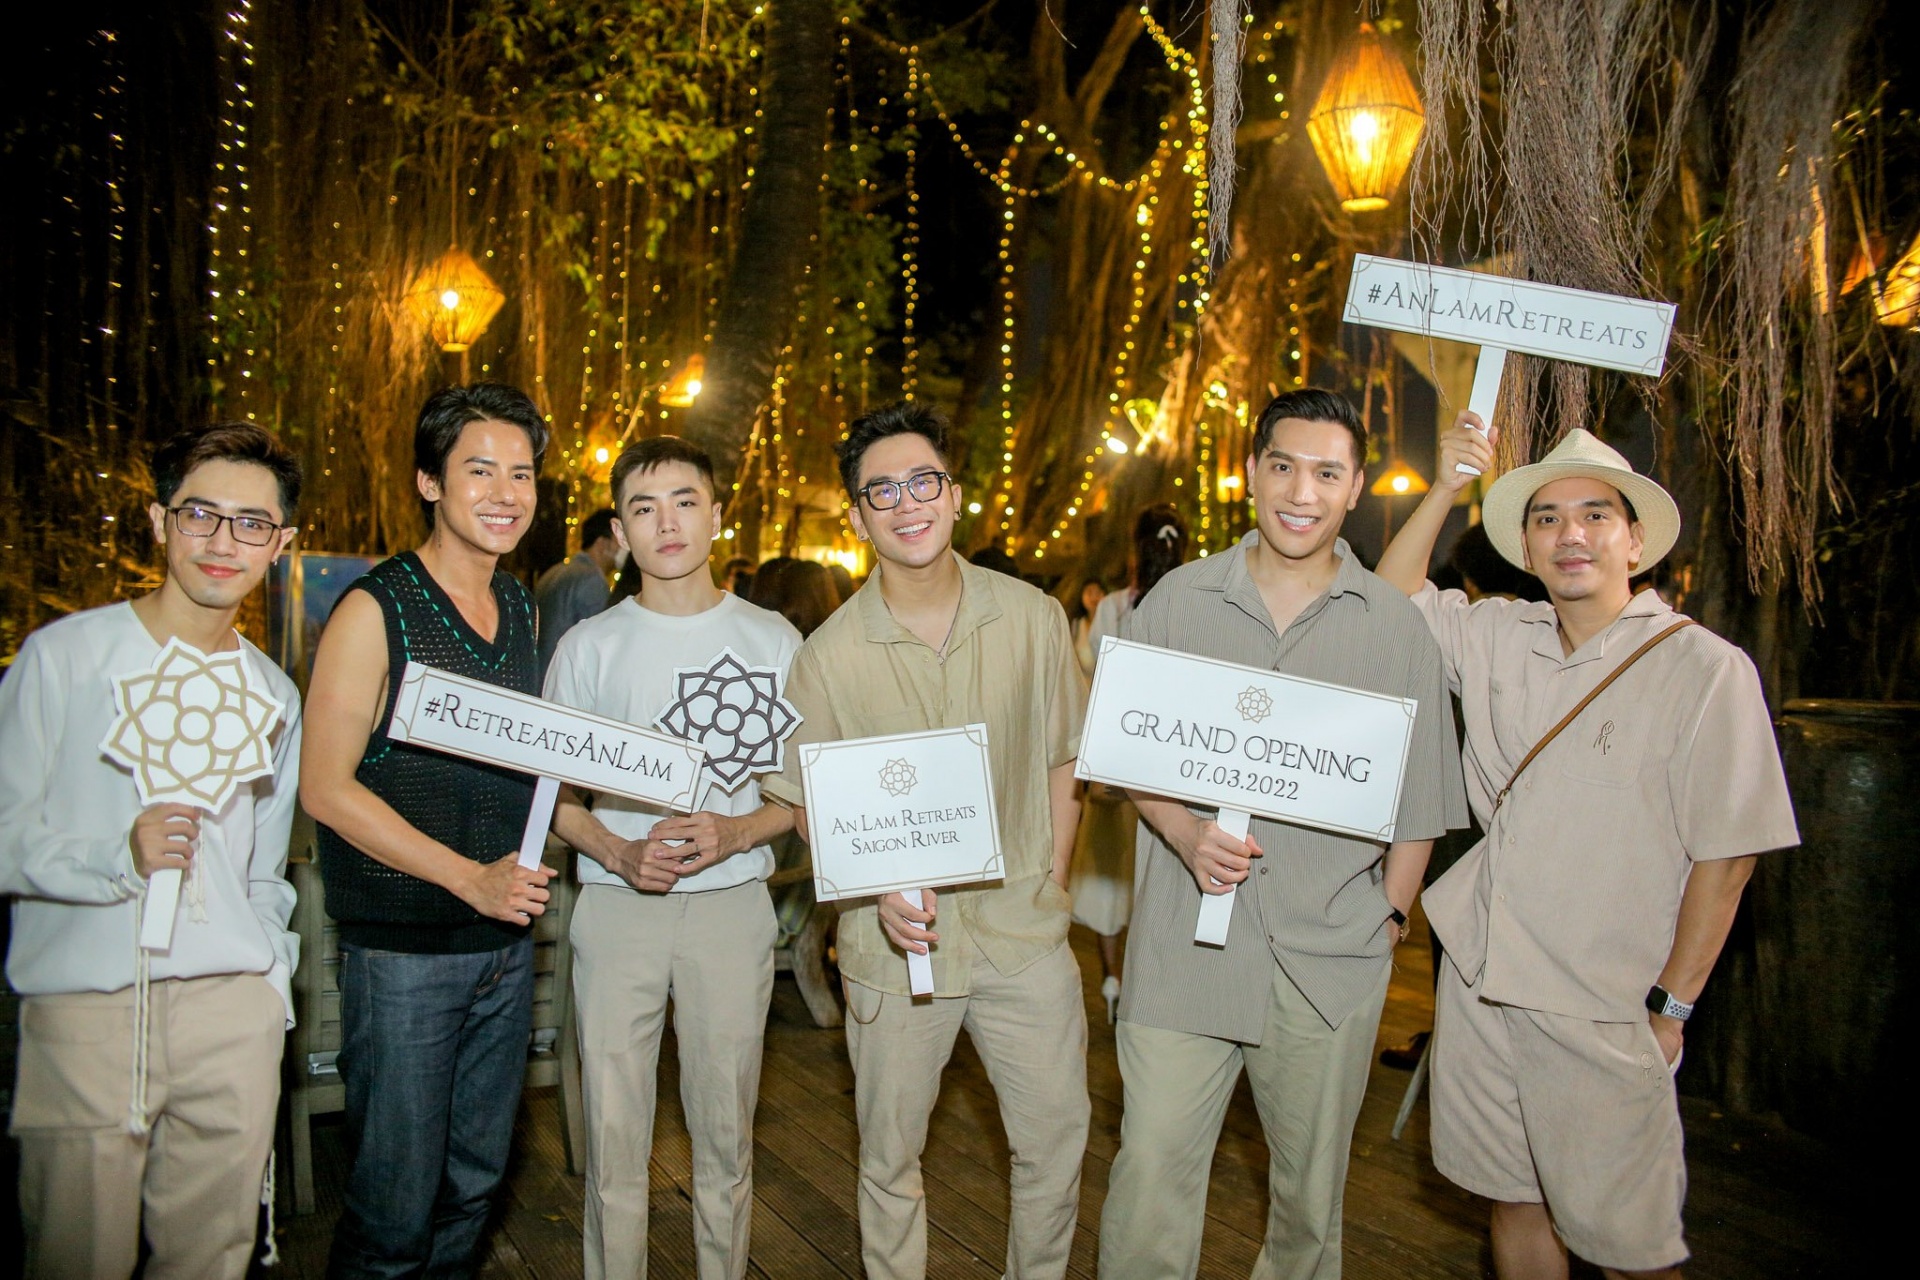 An Lam Retreats Saigon River Resort celebrates grand reopening